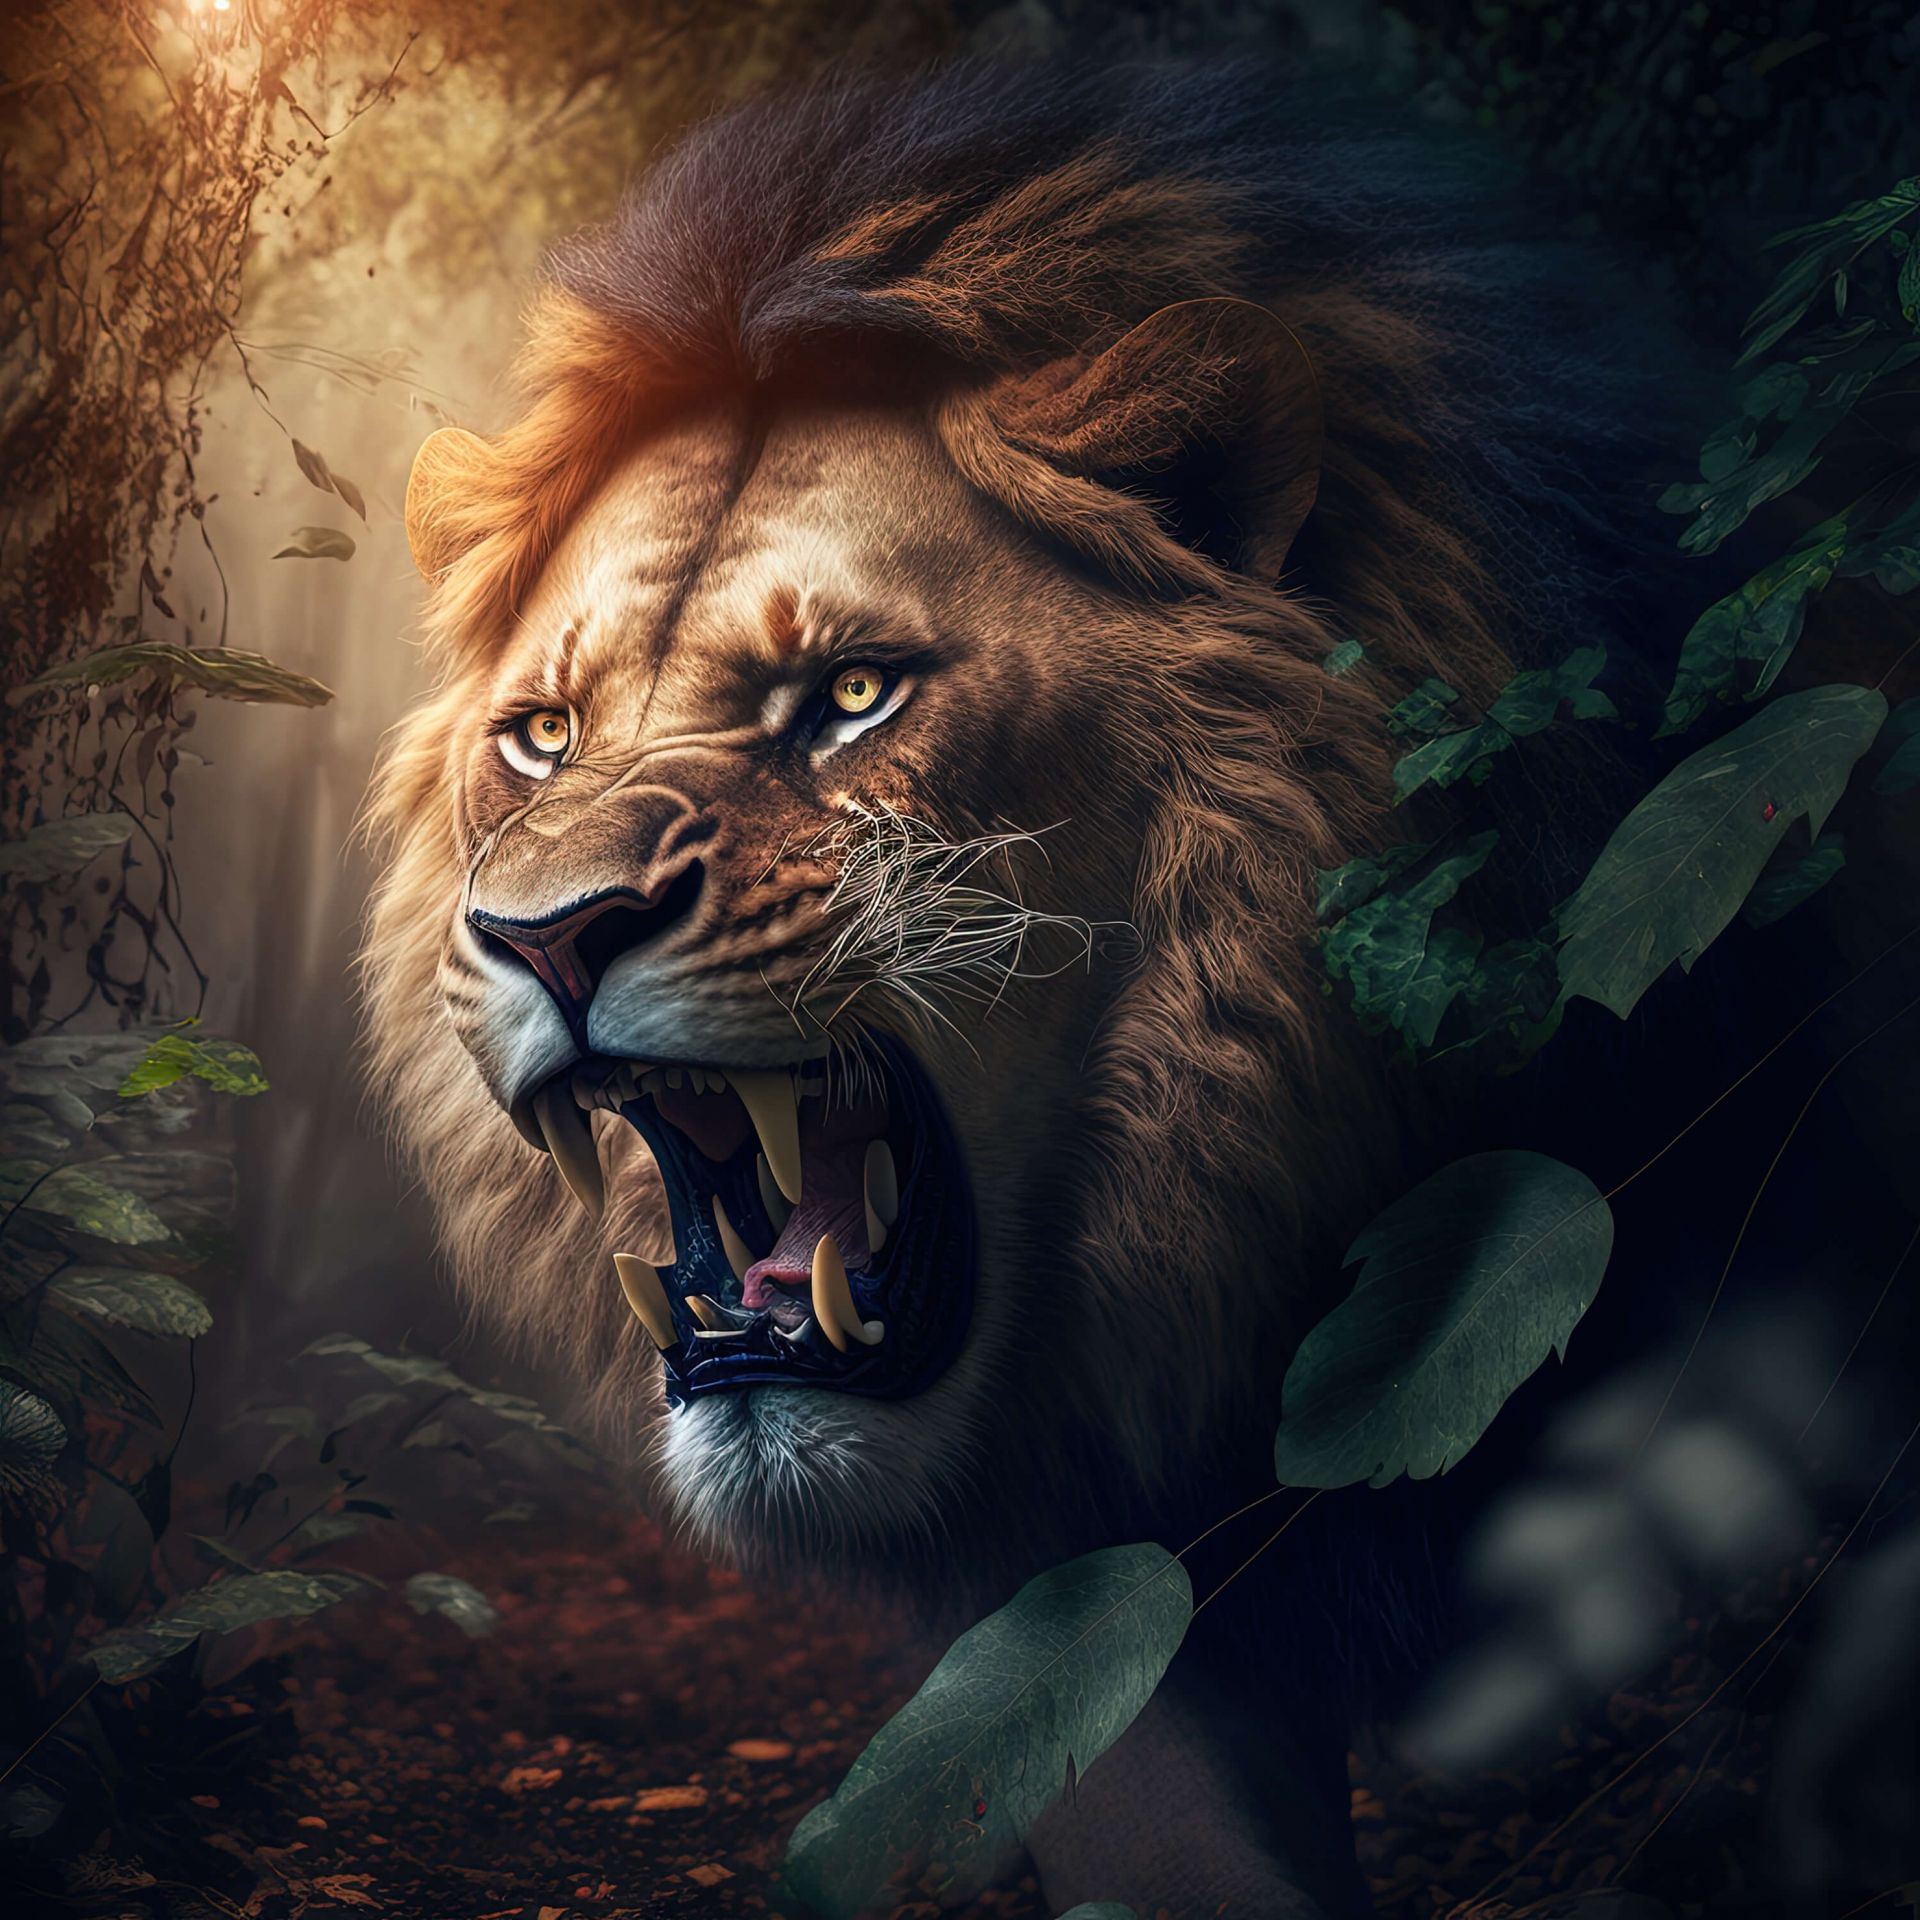 Lion in the jungle - Wallpaper